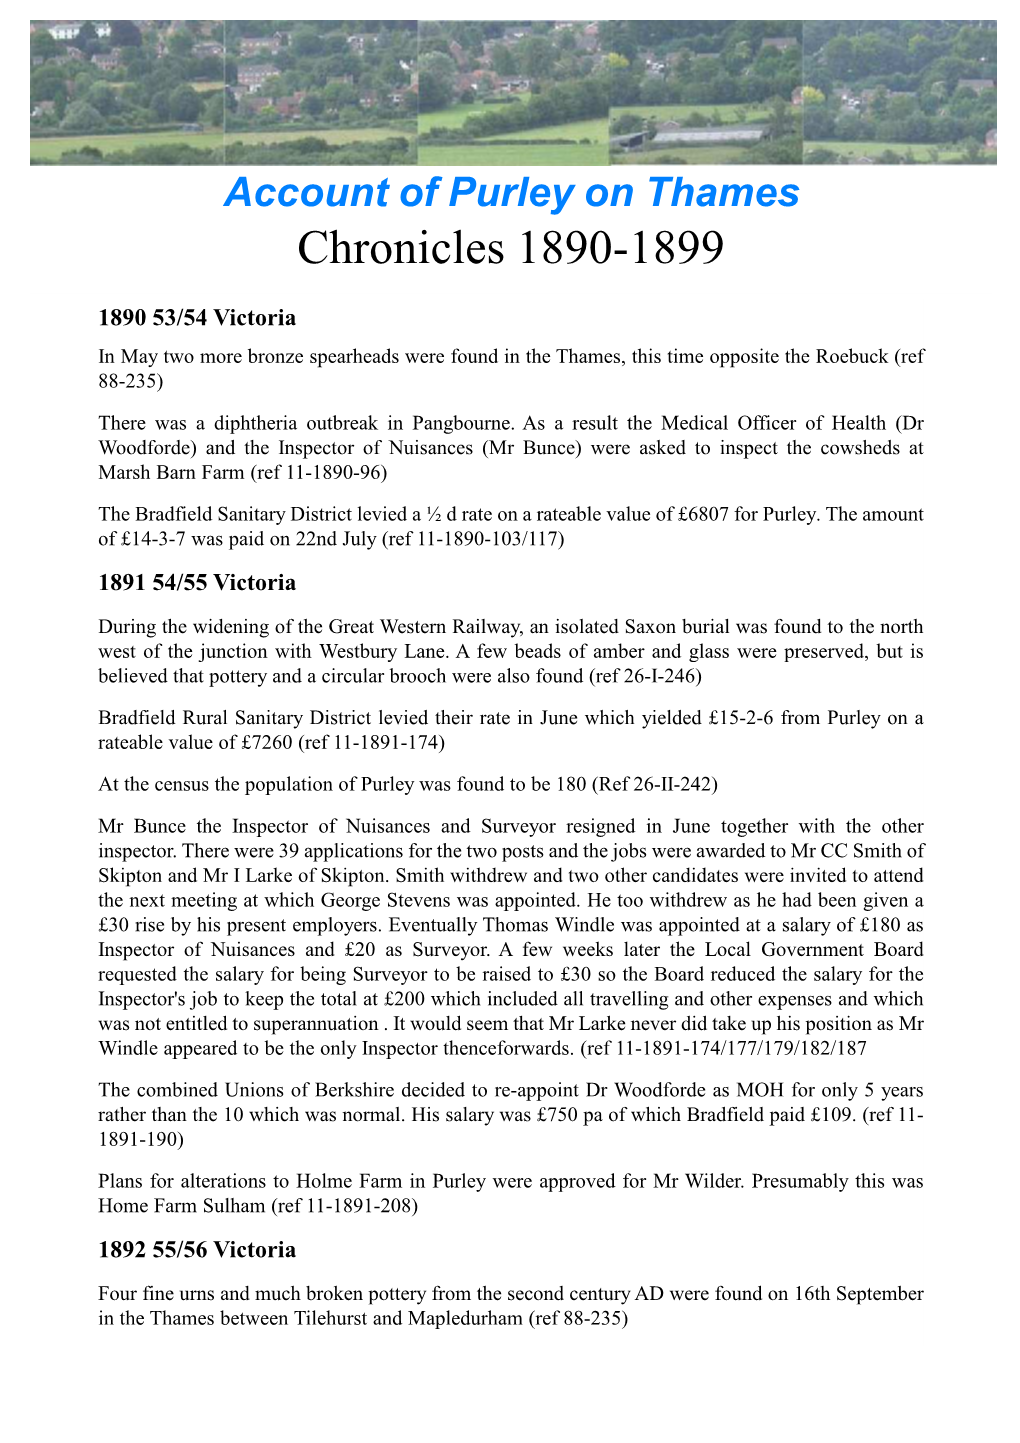 Chronicles 1890-1899